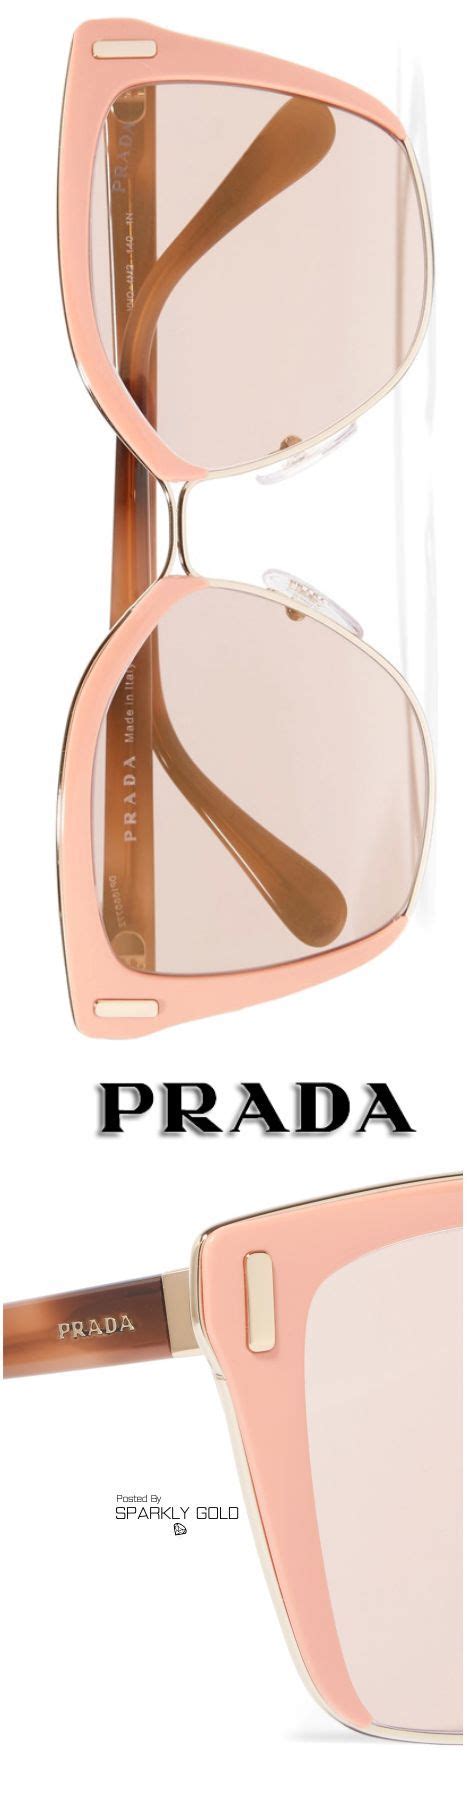 prada sale up to 75 off shot at stylizio for women s and men s designer handbags luxury